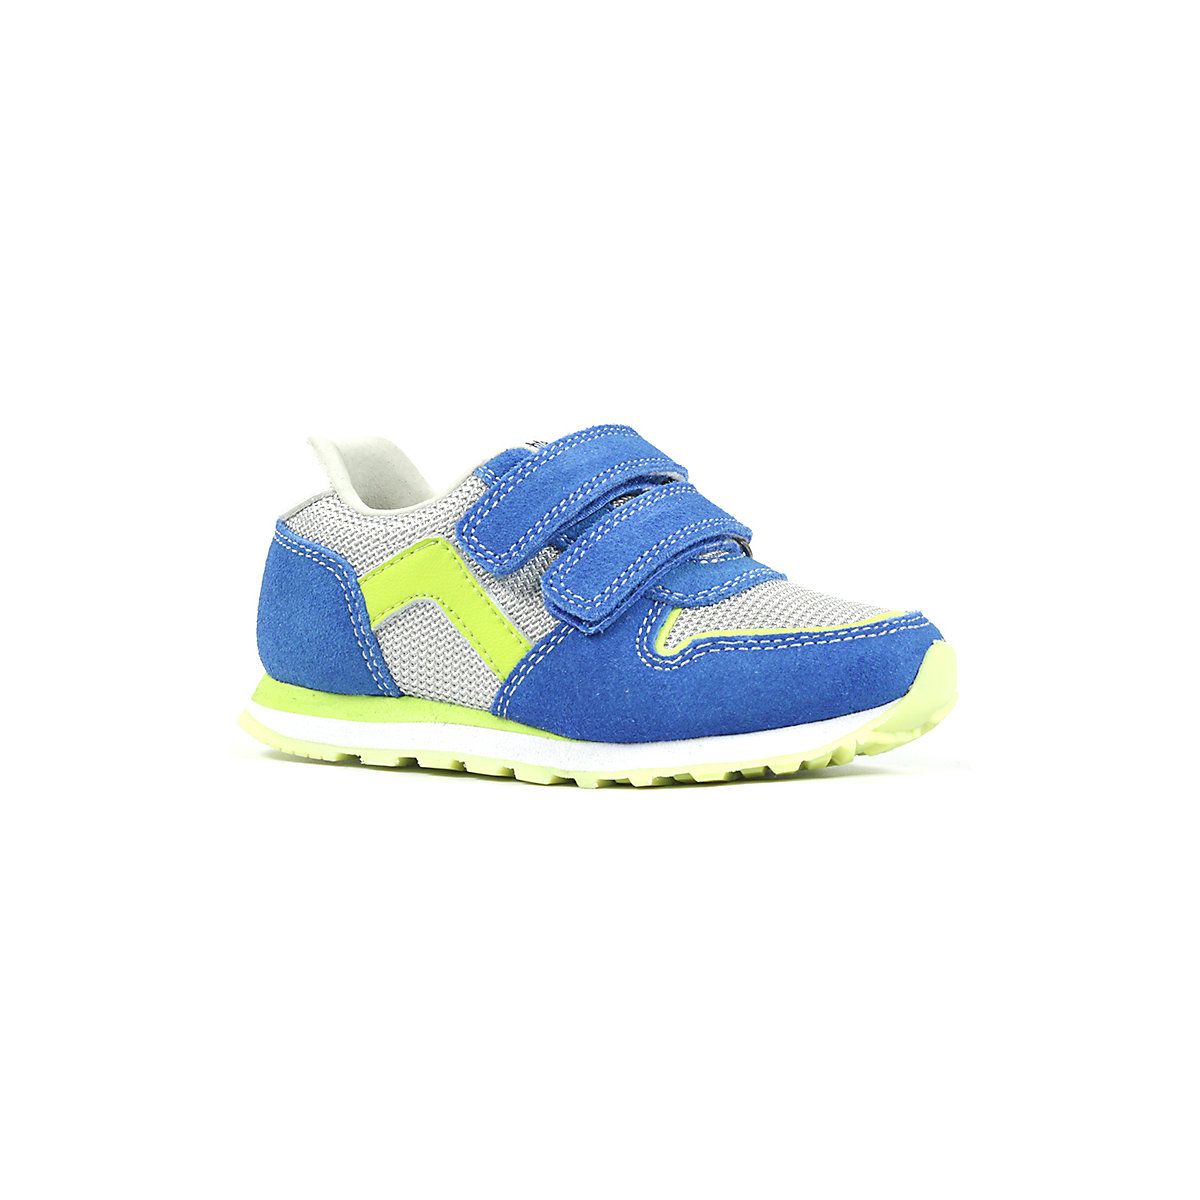 RICHTER Baby Low Sneakers für Jungen blau-kombi